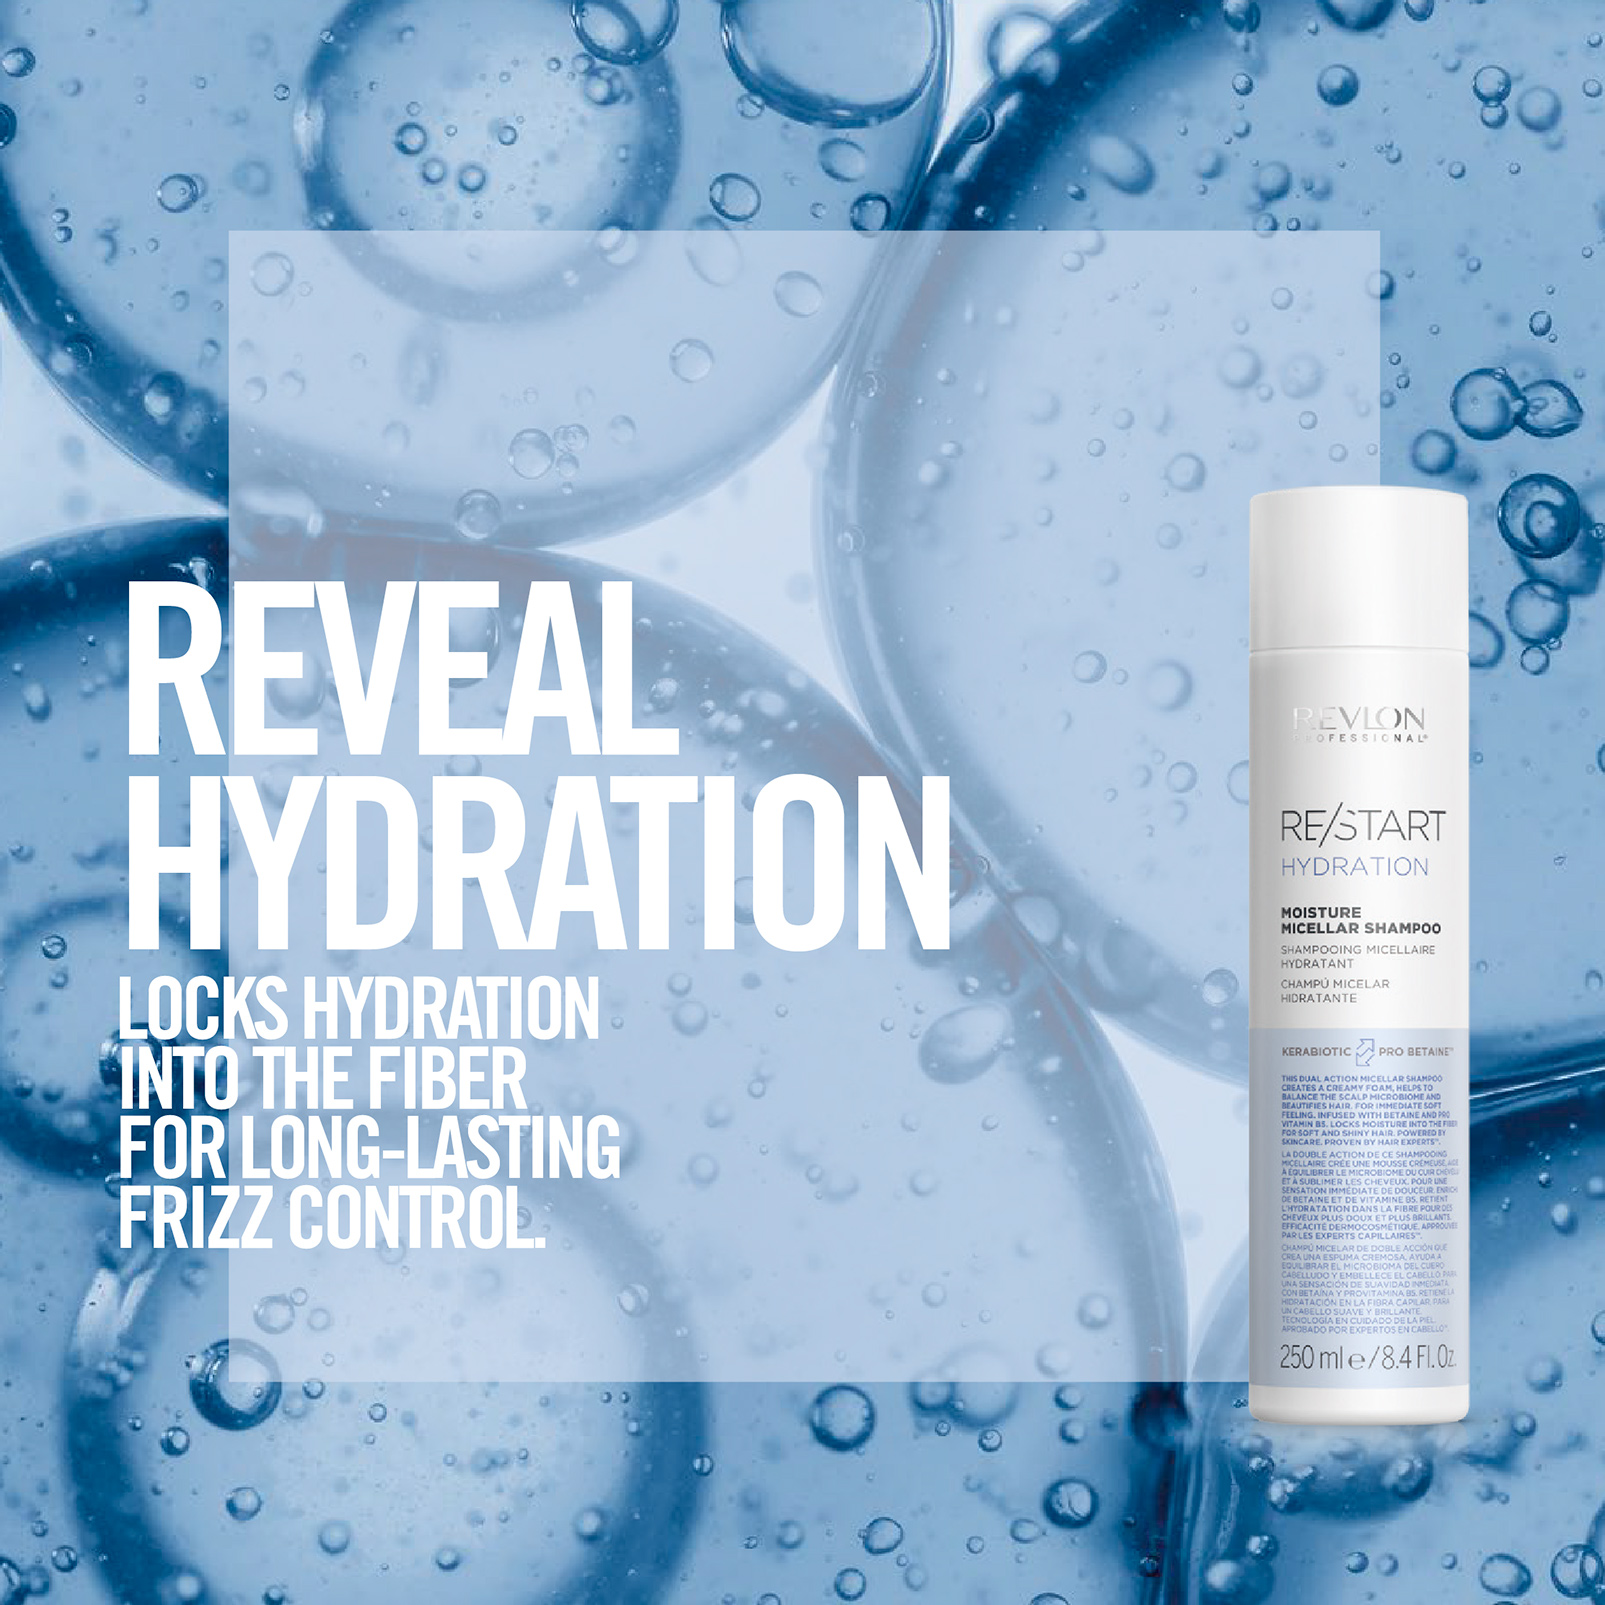 RE/START™ Hydration - Moisture Shampoo Professional Micellar Revlon